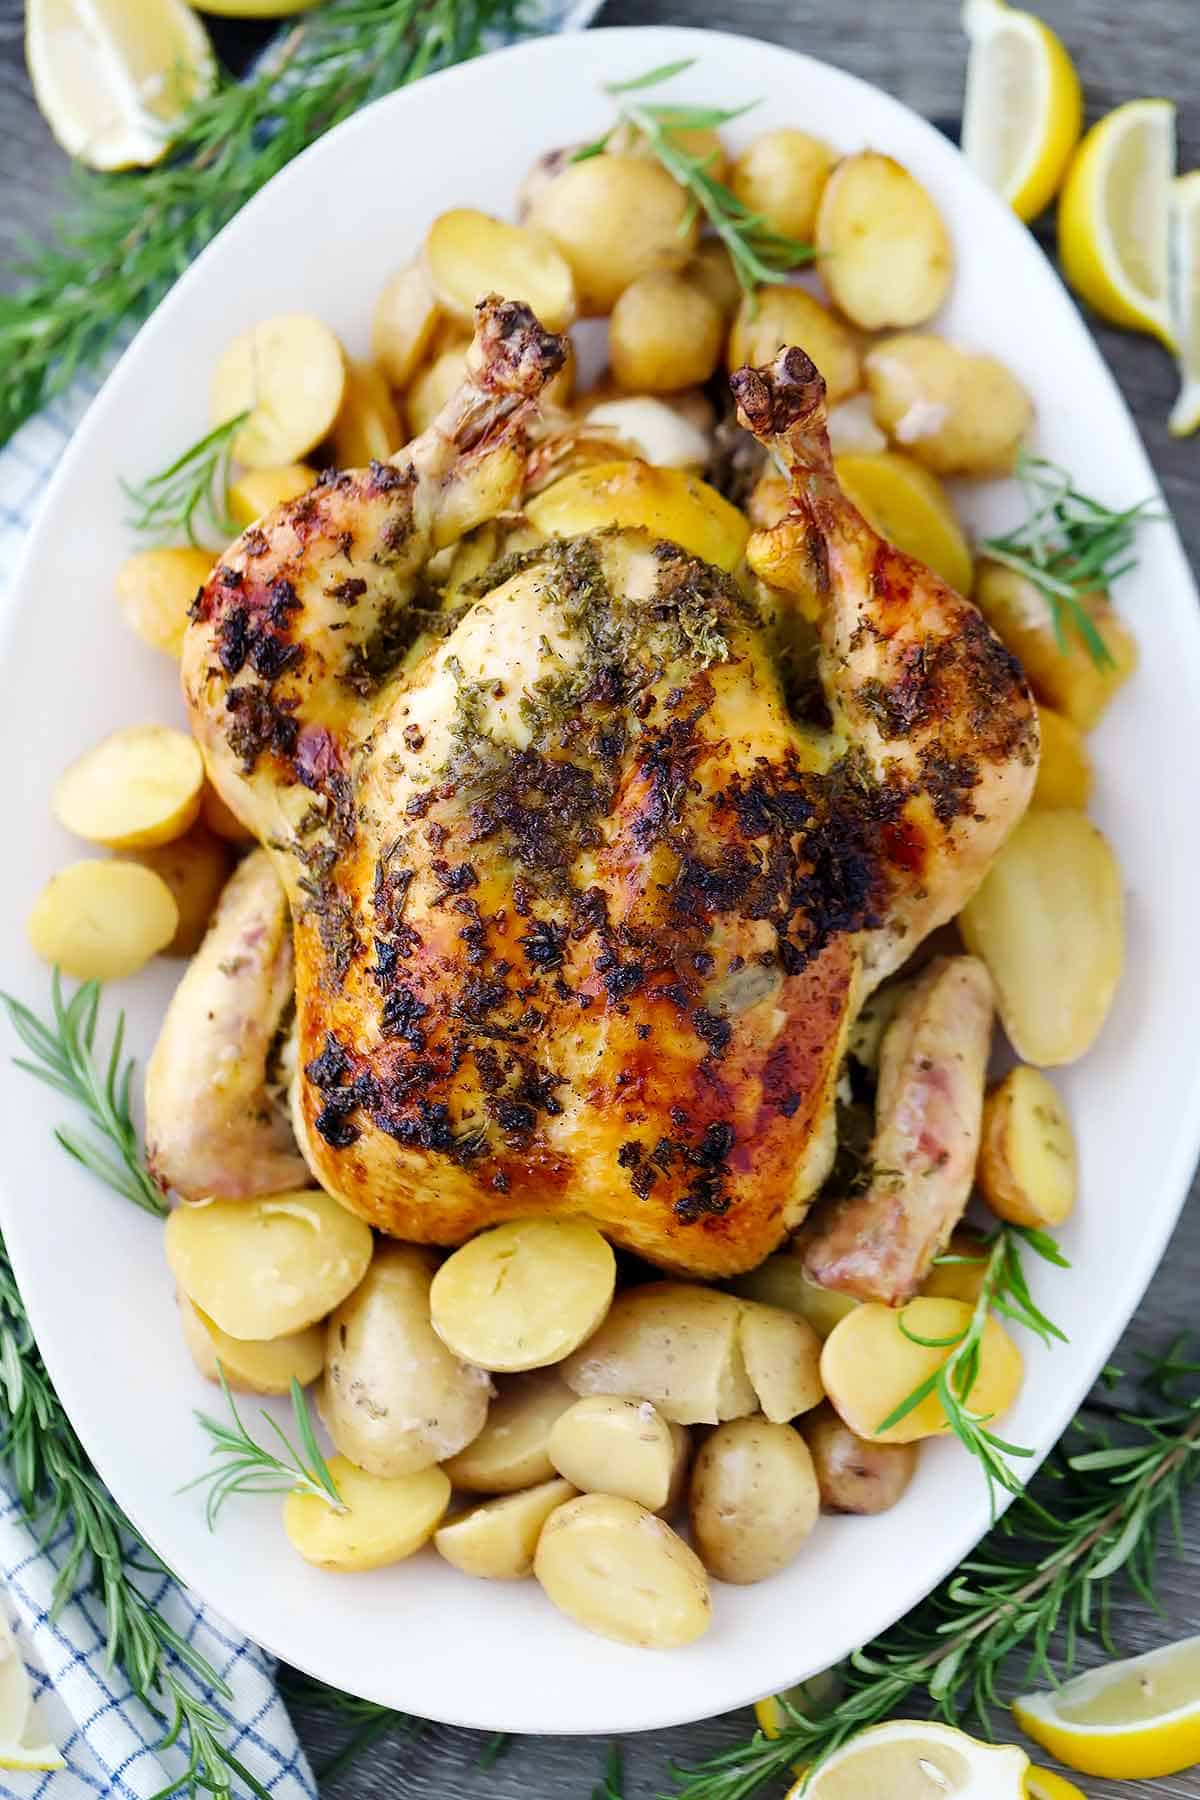 https://www.bowlofdelicious.com/wp-content/uploads/2014/03/Dutch-Oven-Roast-Chicken-3.jpg